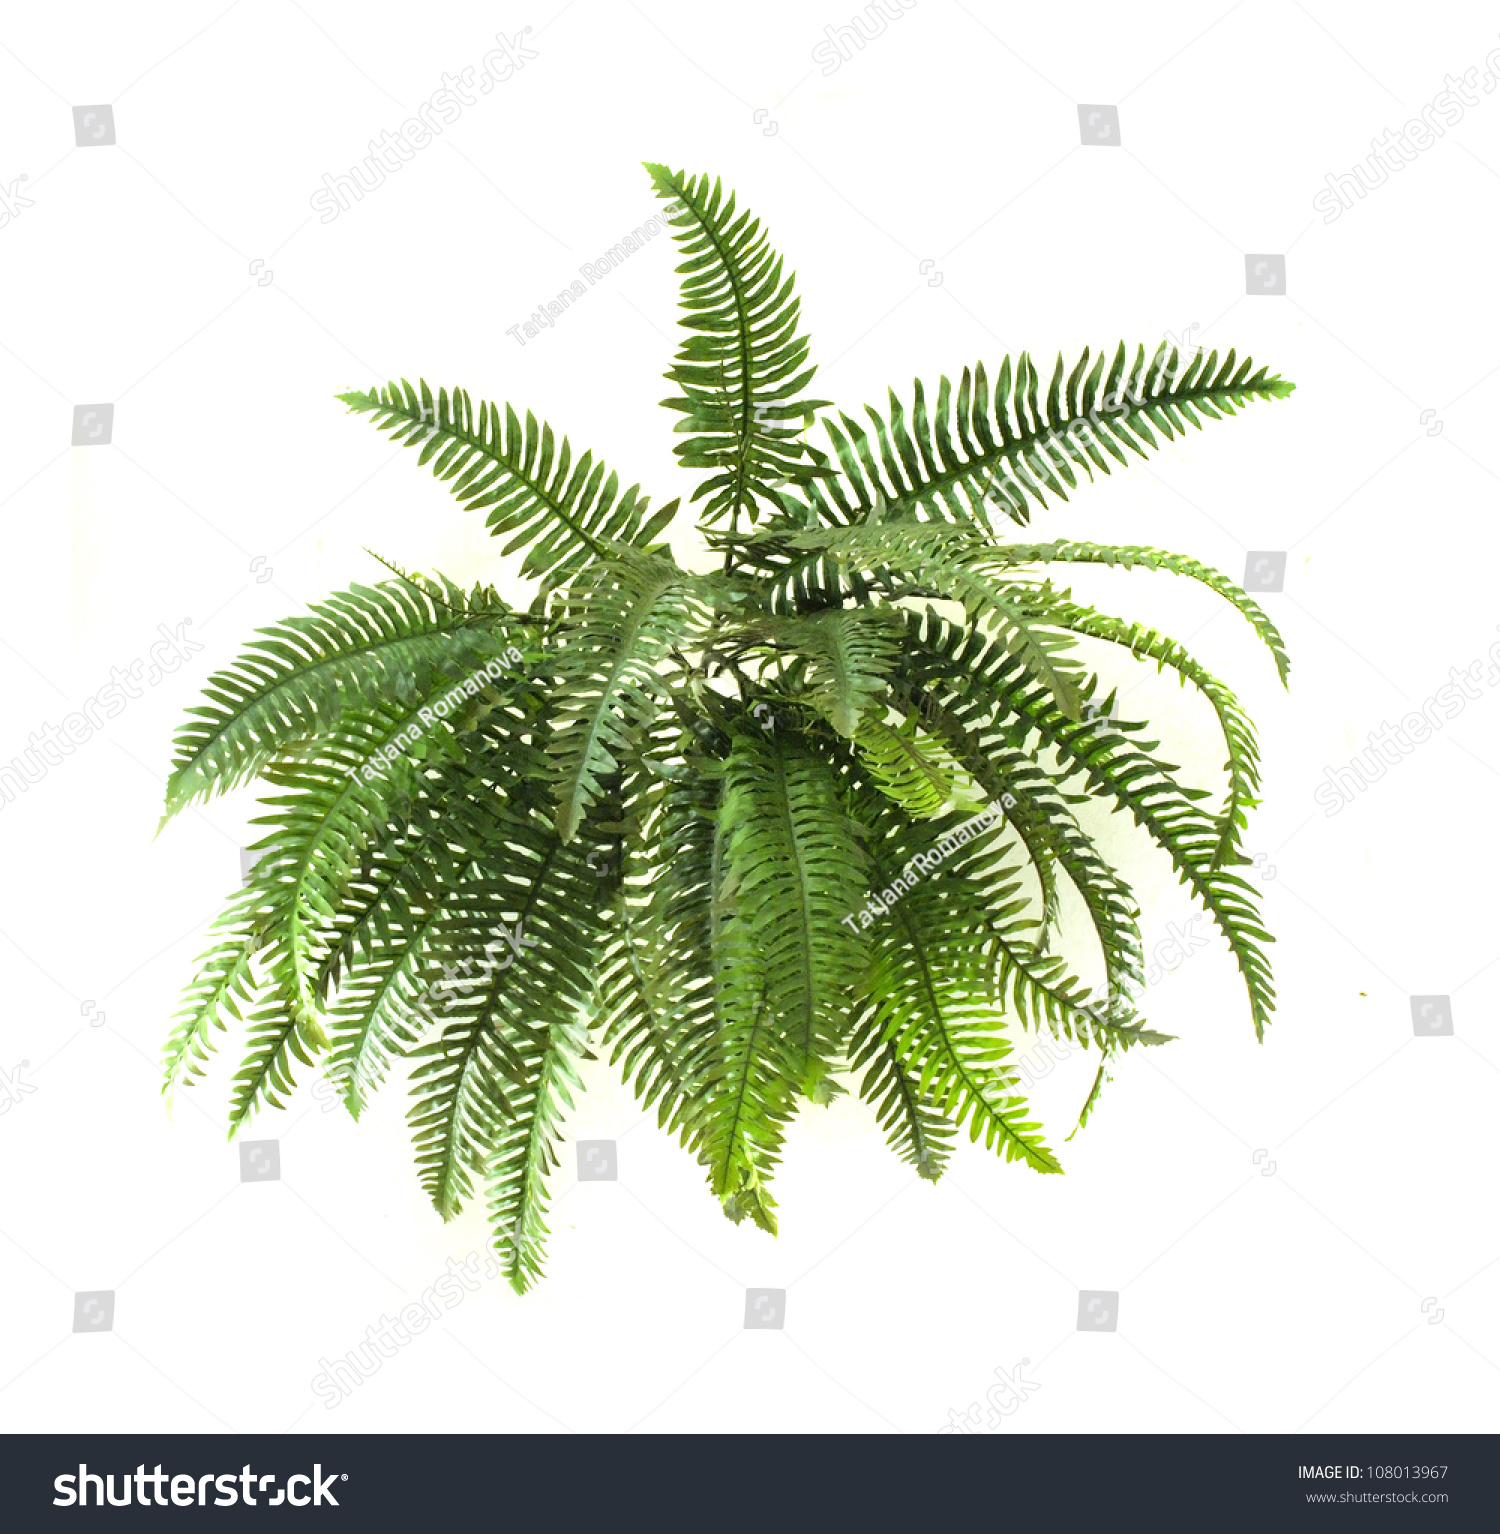 Royalty-free Green fern on white background #108013967 Stock Photo ...